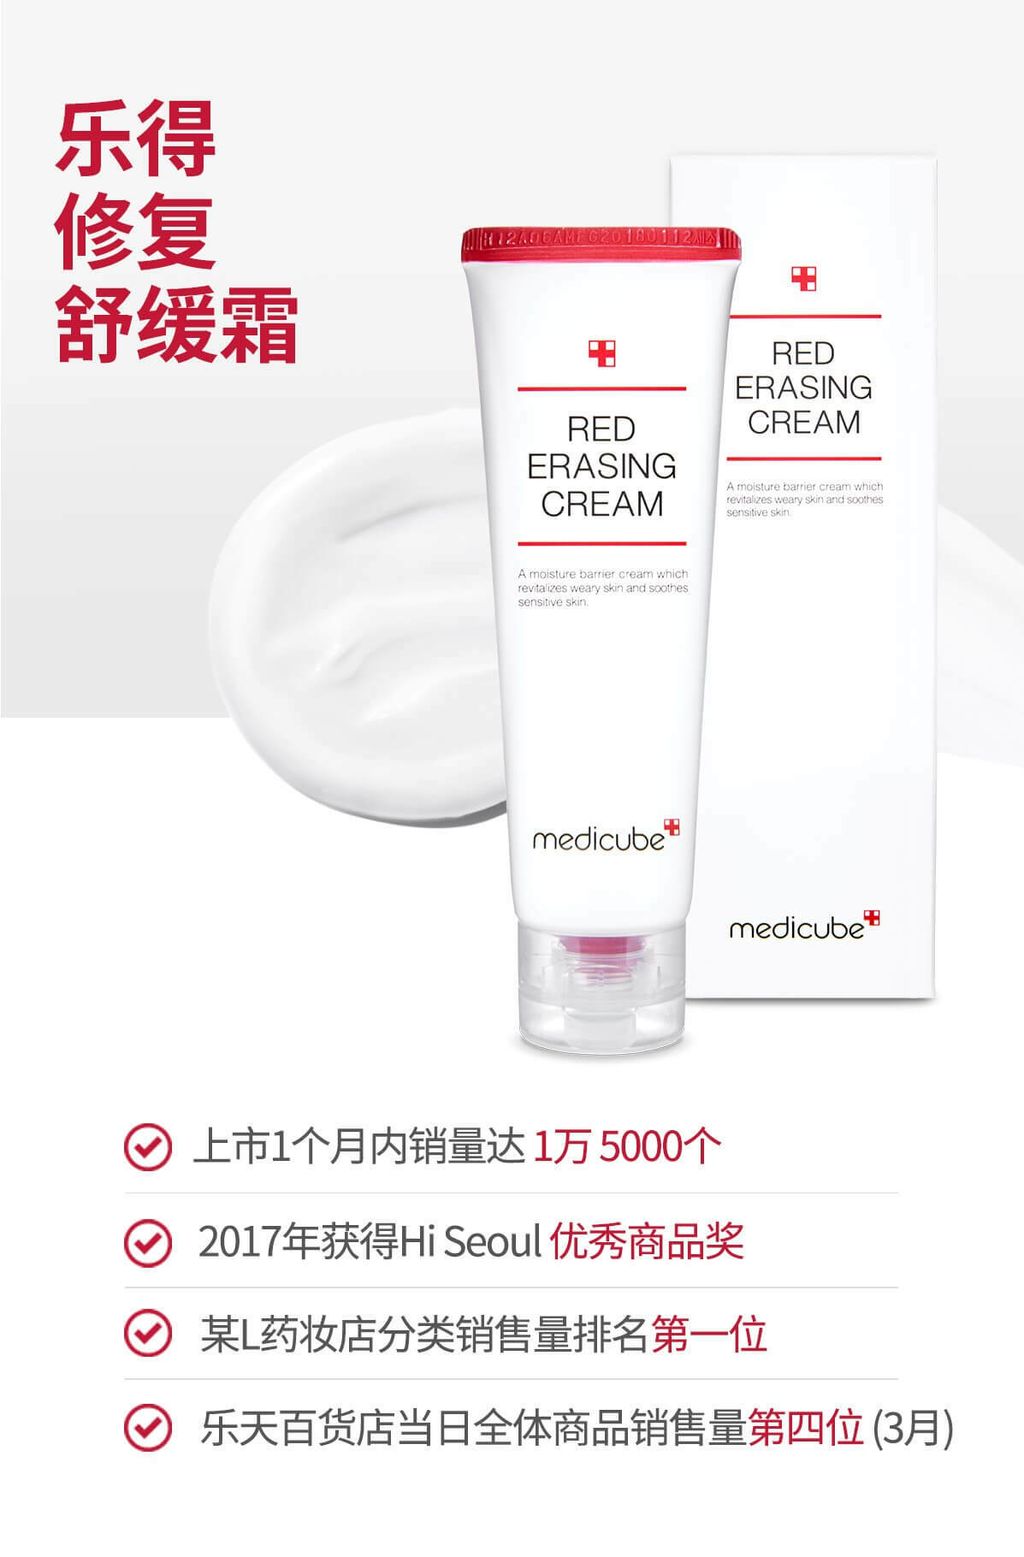 JuzBeauty_JuzBeautyMalaysia_JuzPretty_Authentic_Kbeauty_Malaysia_Skin_Care_Cosmetics_Jbeauty_Australia_Health_Care_Medicube_Red_Erasing_Cream_ (8).jpg